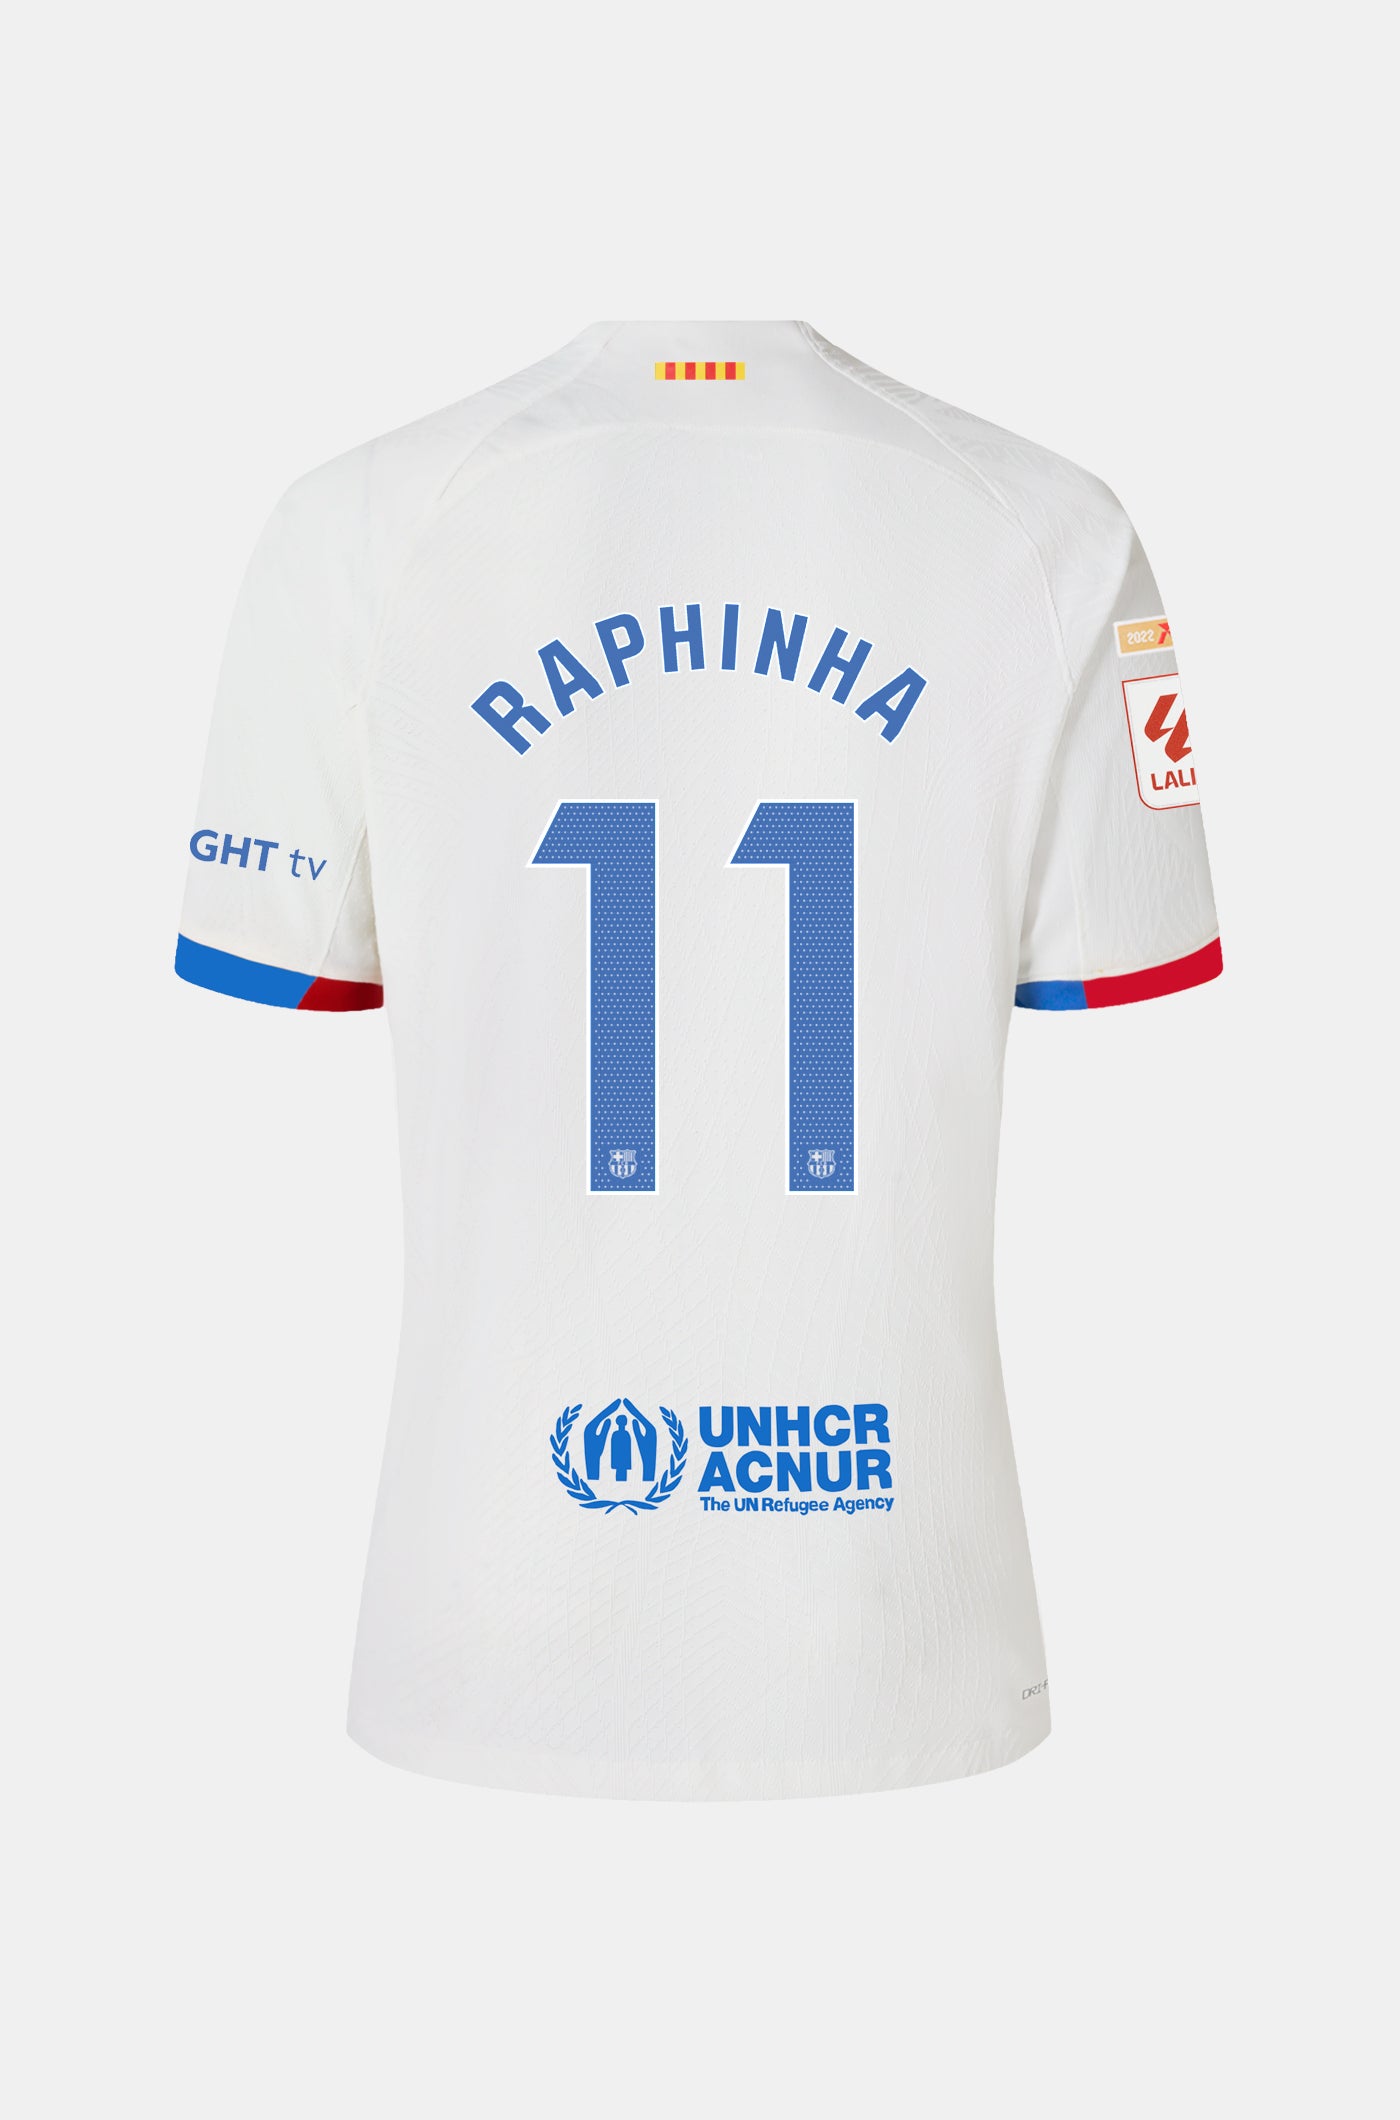 LFP FC Barcelona Away Shirt 23/24 Player’s Edition - Women - RAPHINHA